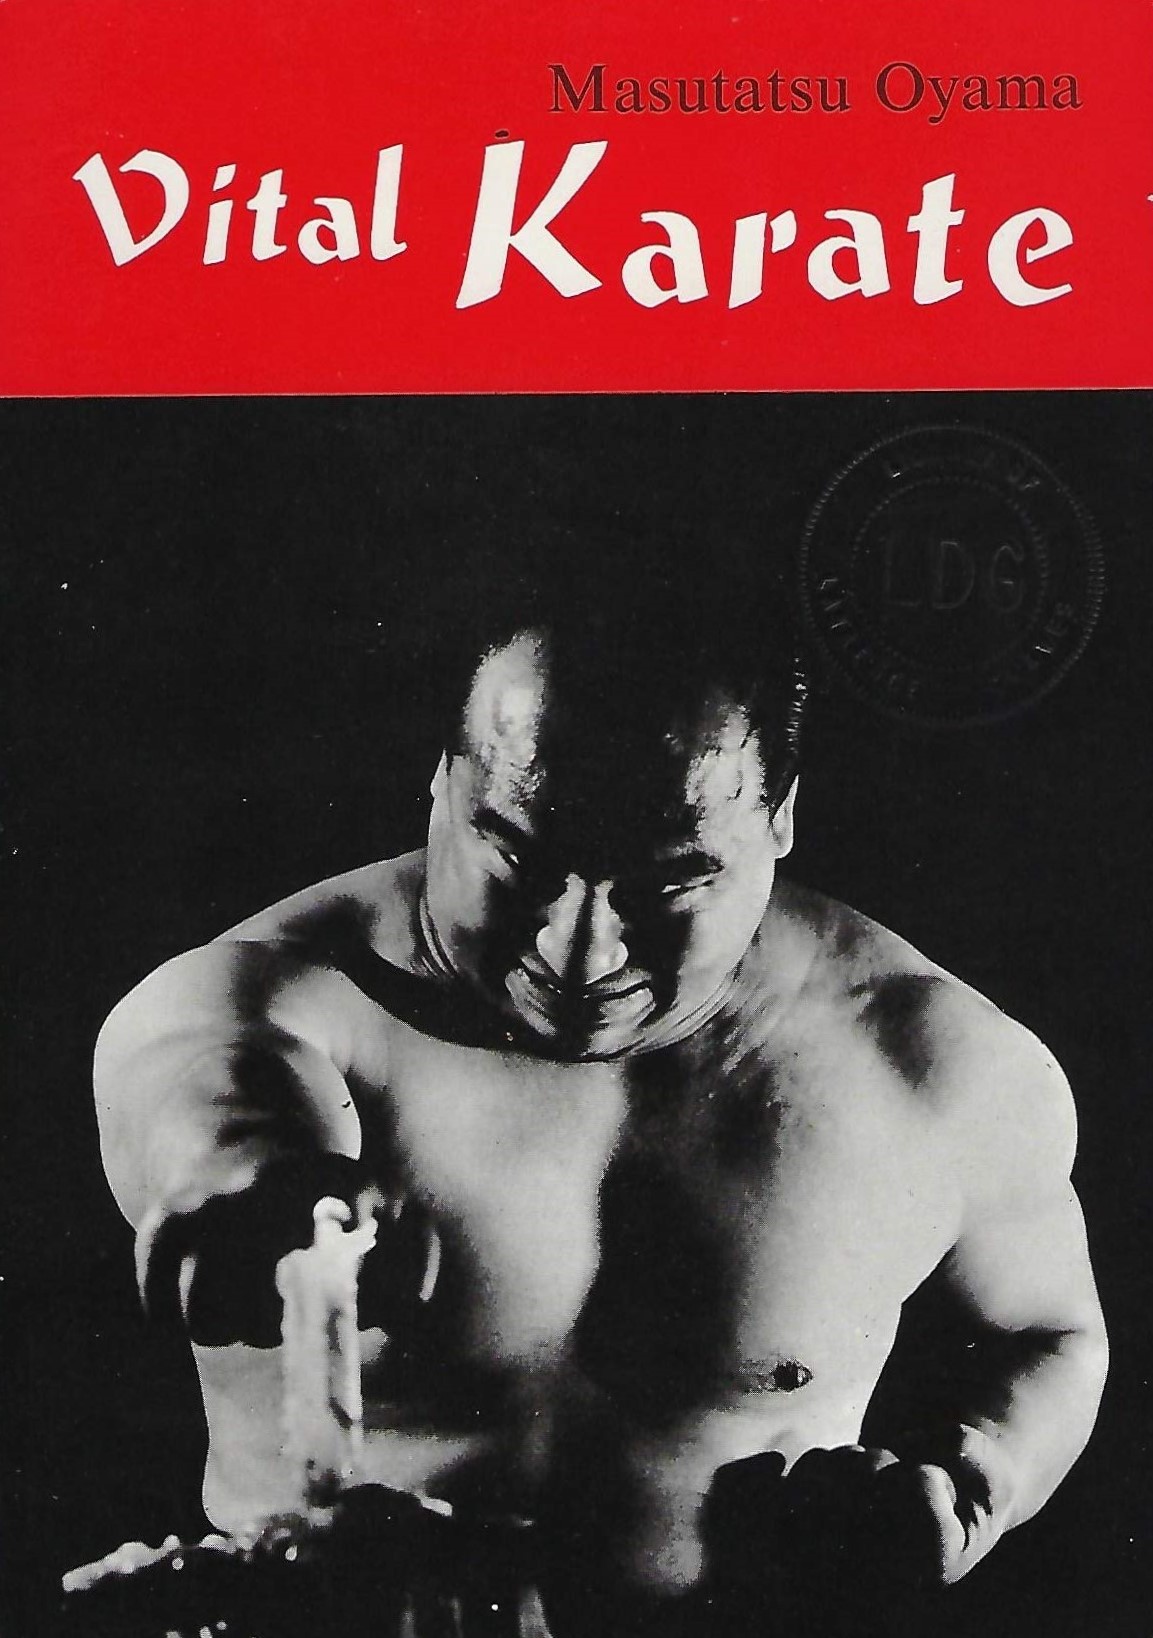 Vital Karate - Masutatsu Oyama - Kyokushin